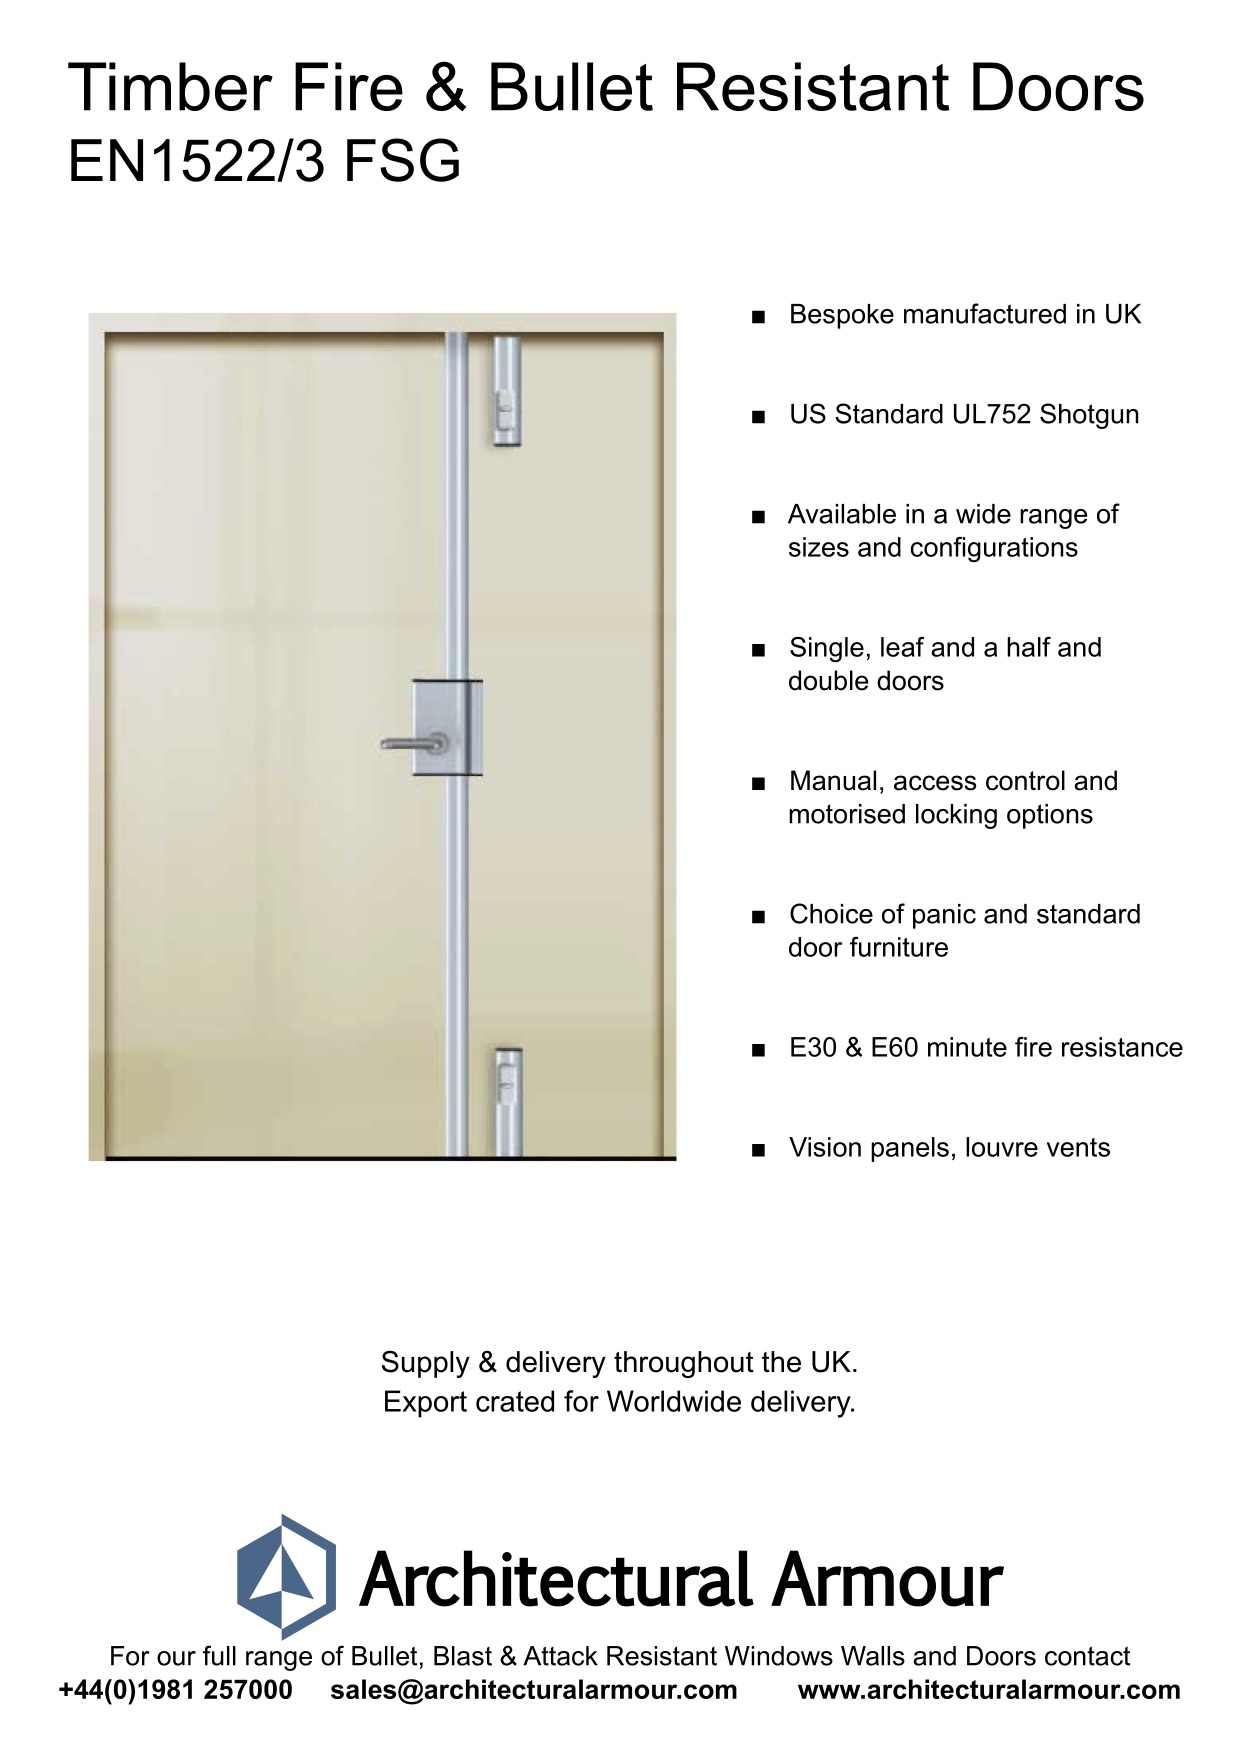 Fire-Resistant-and-Bullet-Resistant-EN1522-3-FSG-Timber-Doors